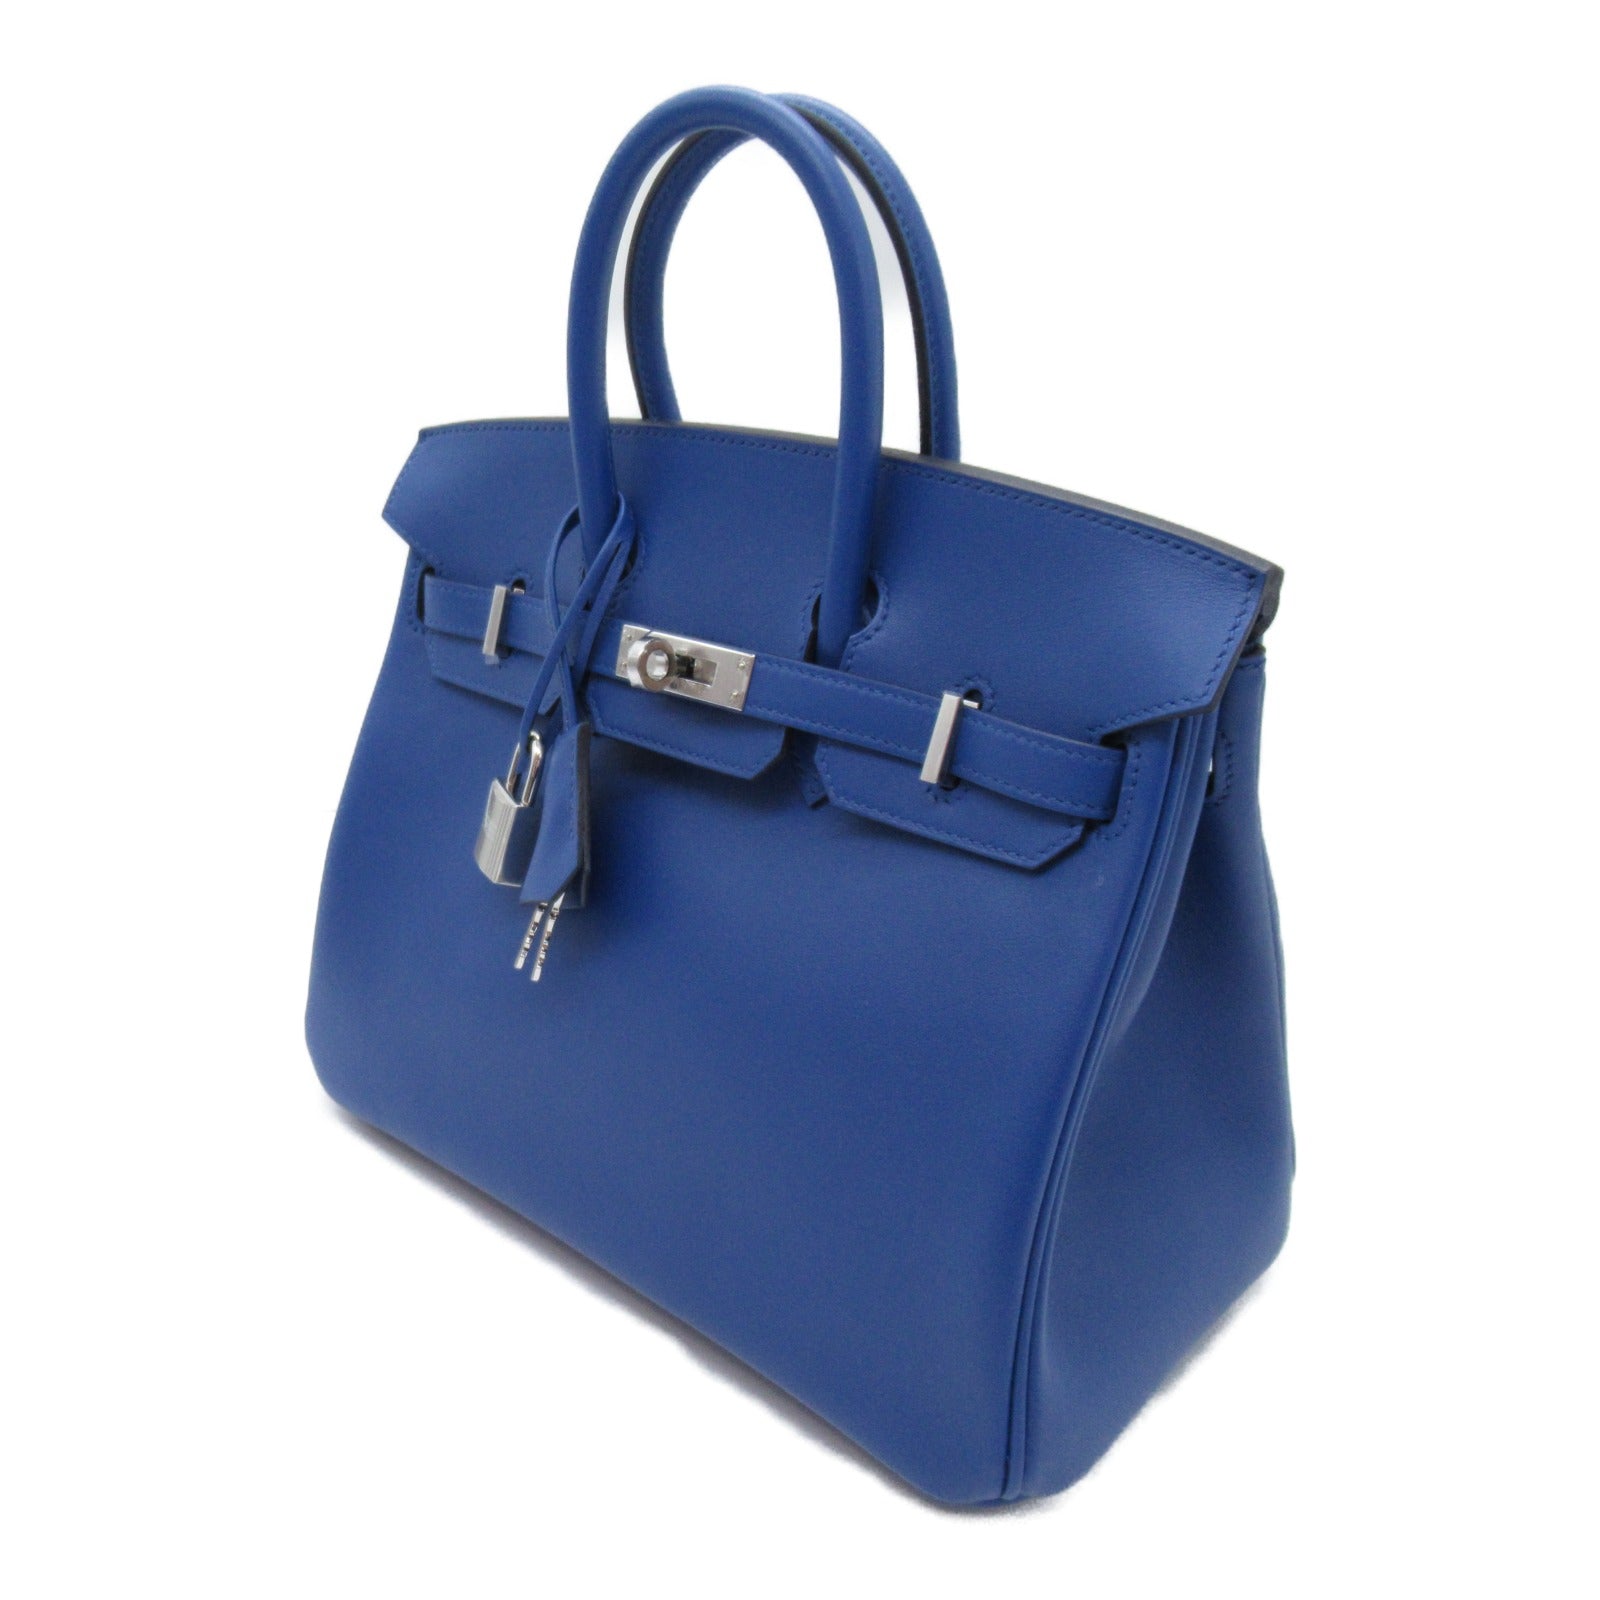 Hermes Hermes Birkin 25 Blue French Handbag Handbag Handbag Handbags Handbags Handbags